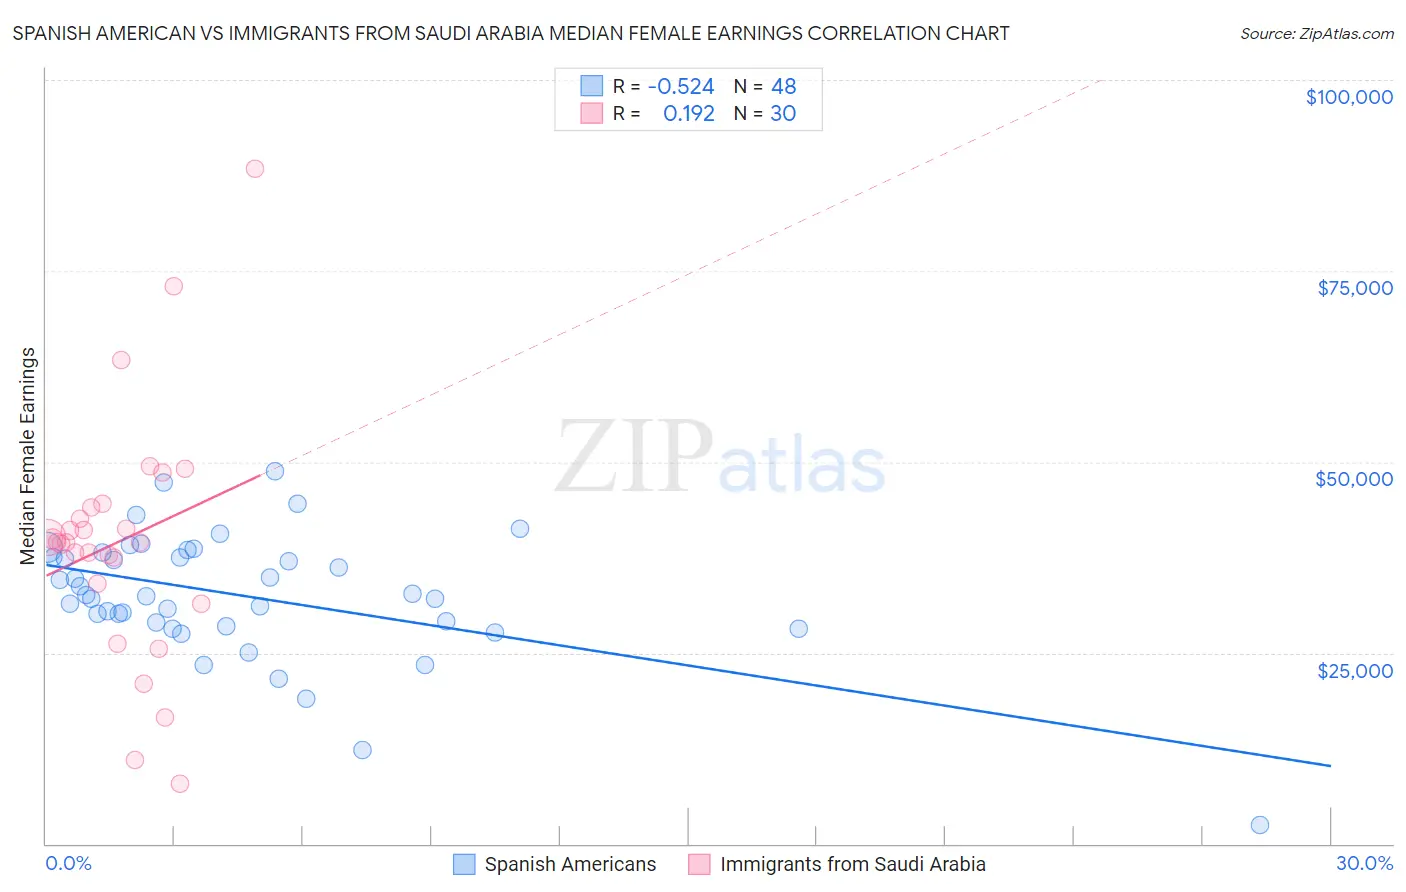 Spanish American vs Immigrants from Saudi Arabia Median Female Earnings